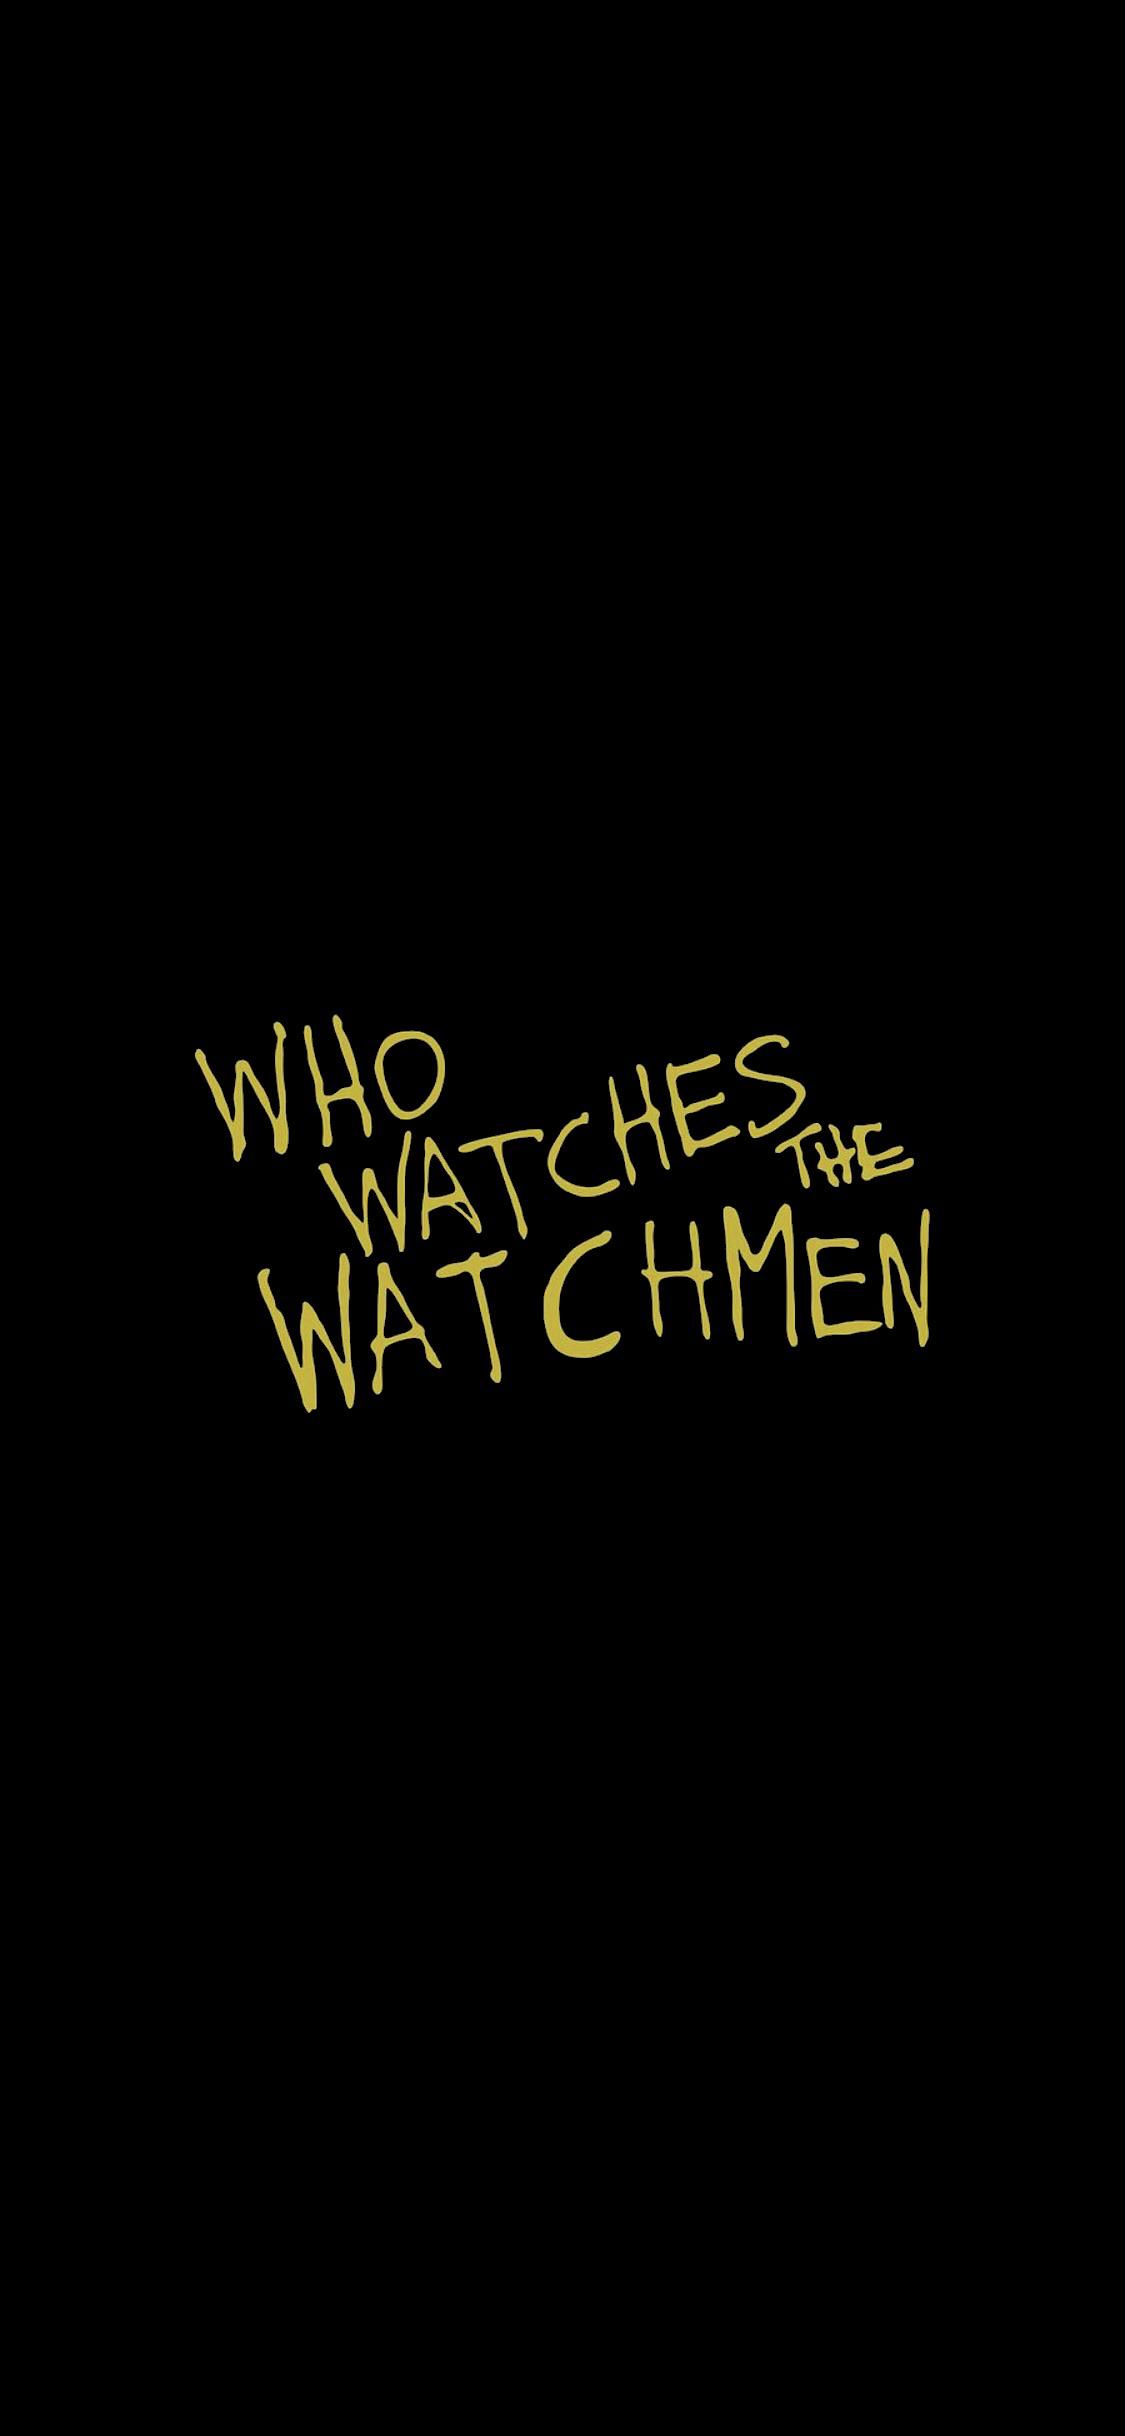 Hbo Watchmen Wallpapers